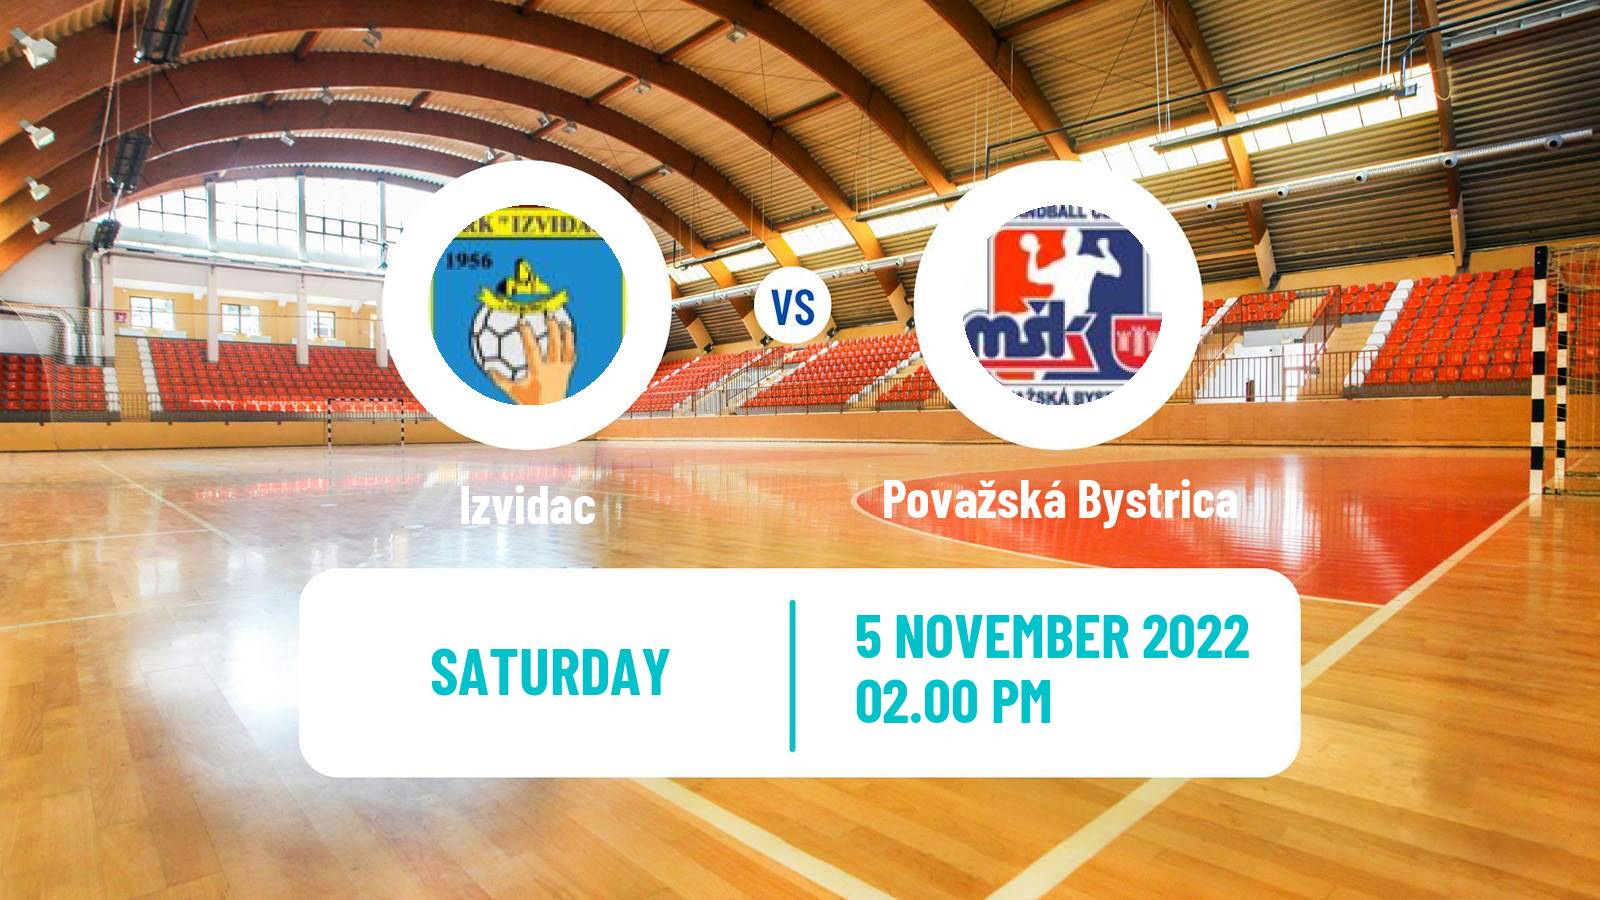 Handball EHF European Cup Izvidac - Považská Bystrica